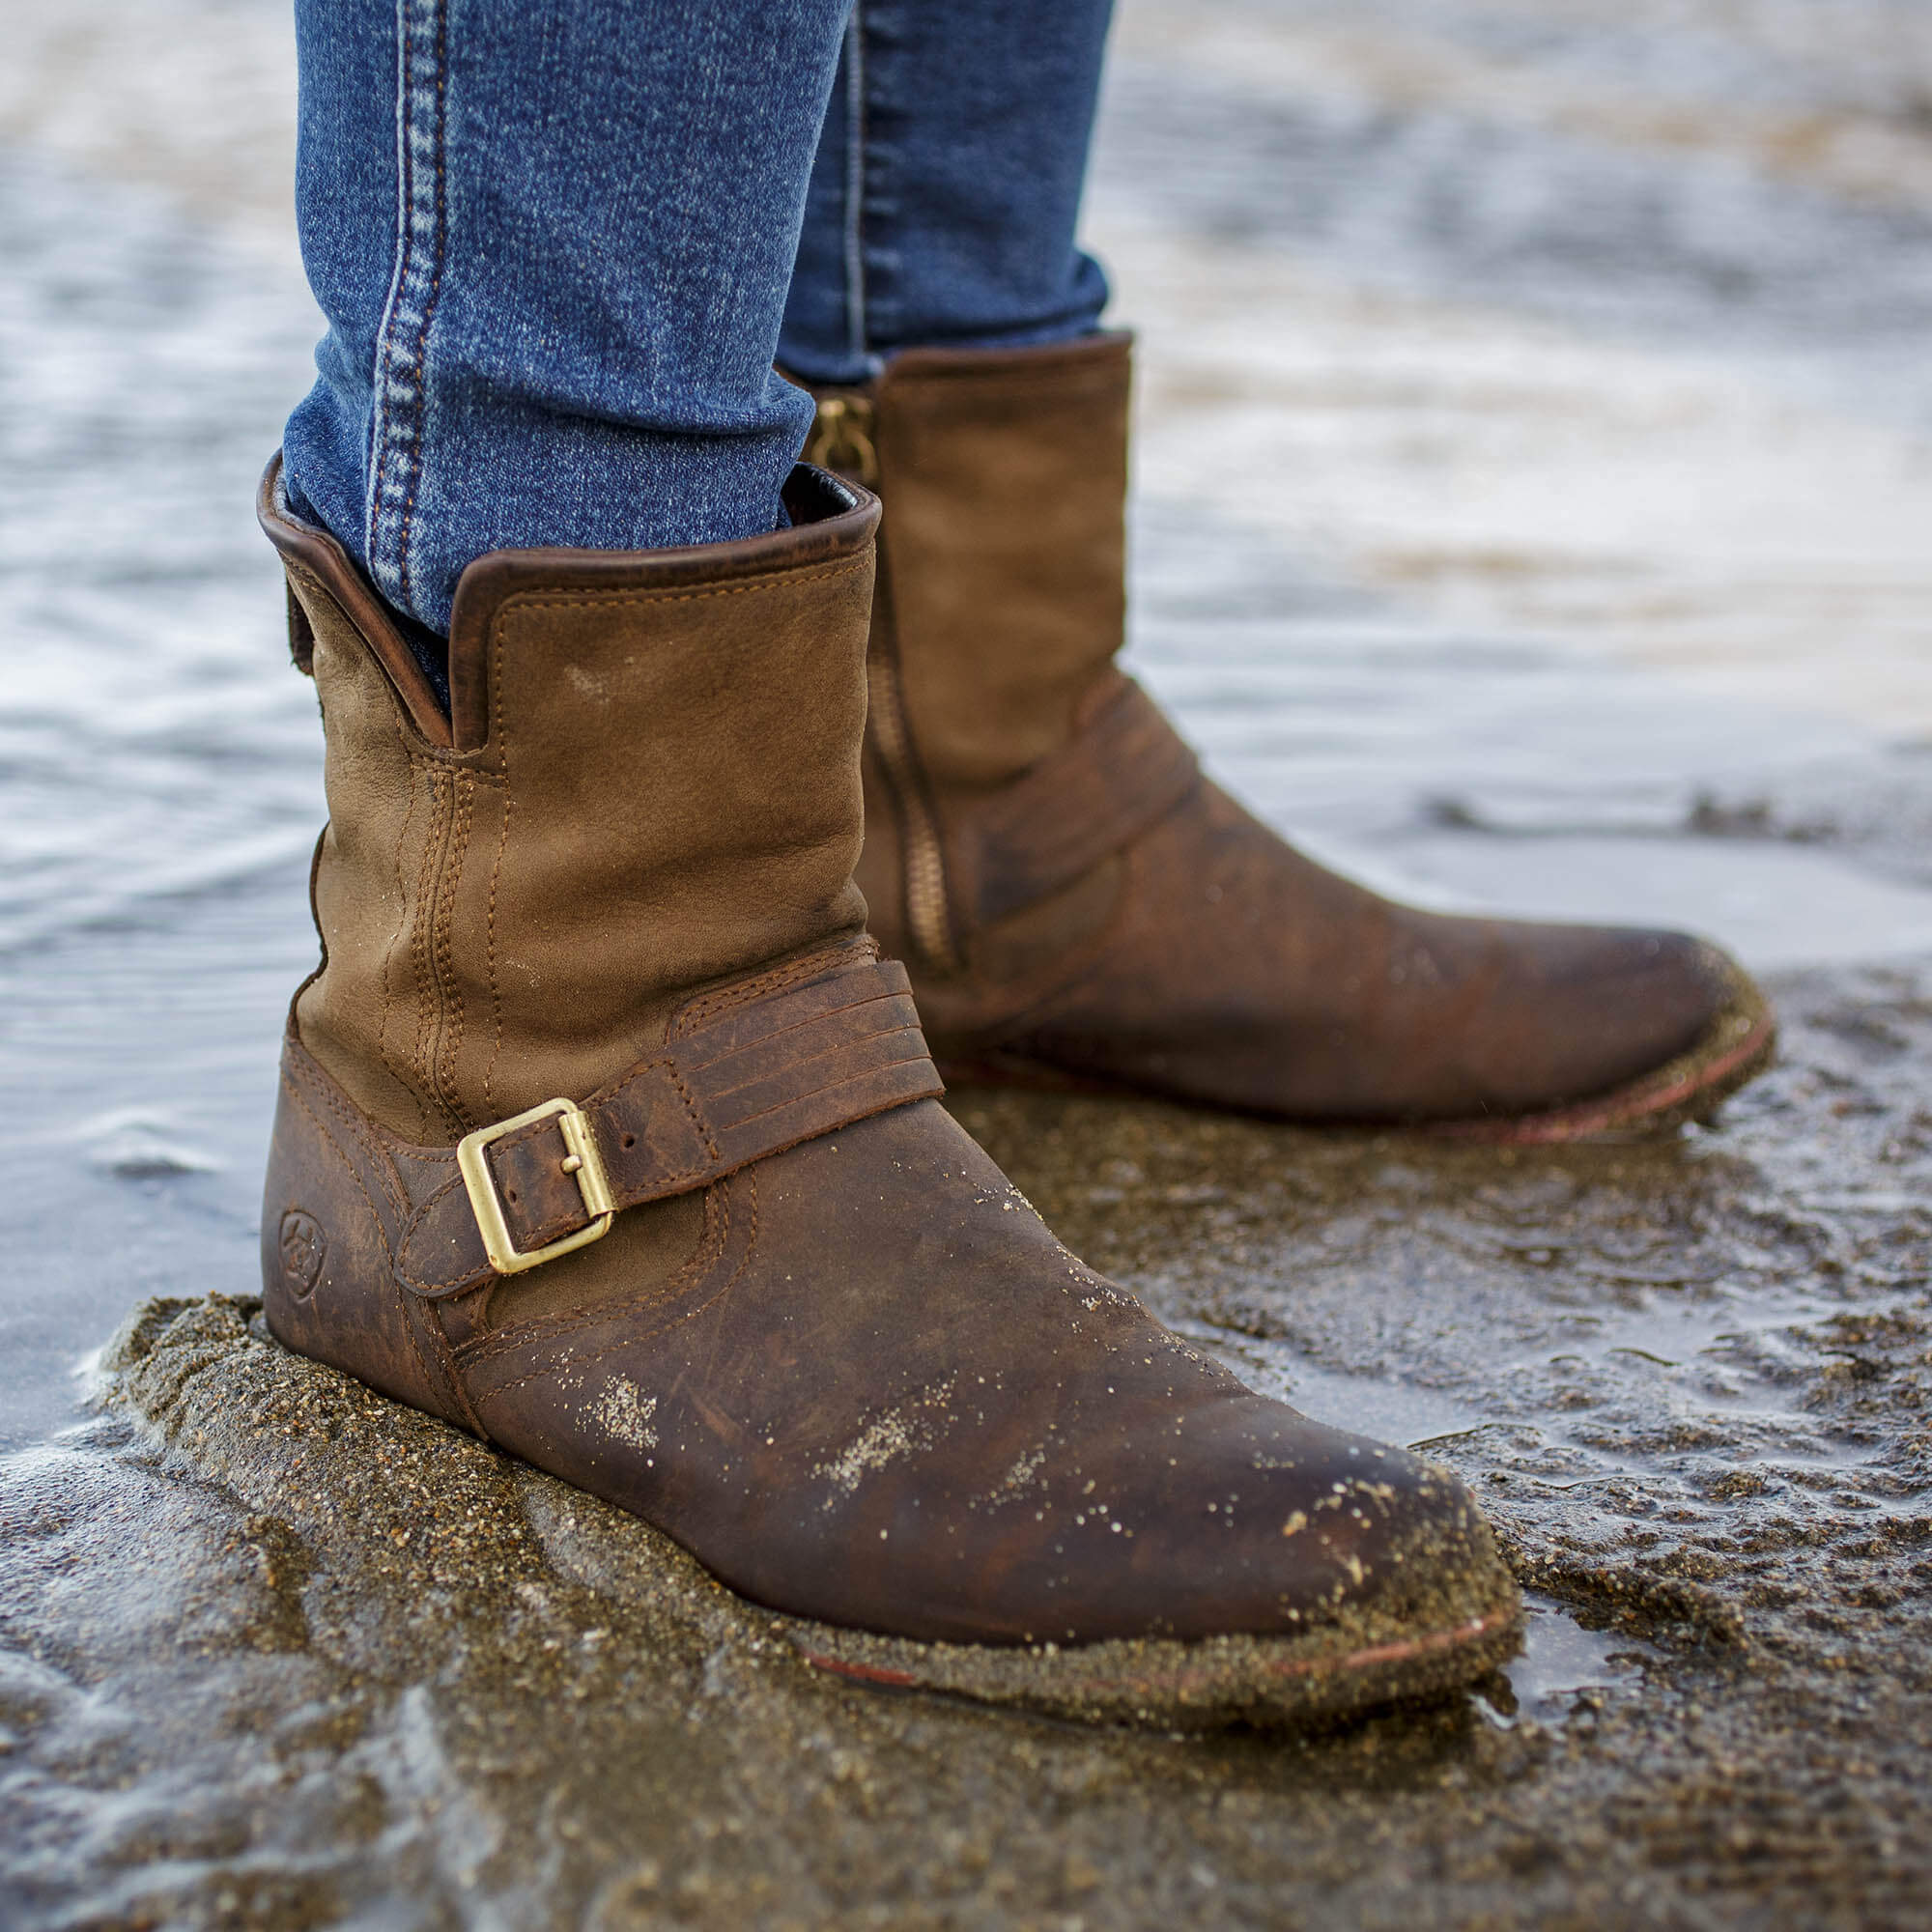 ARIAT Savannah Waterproof Boots - Womens - Chocolate/Willow